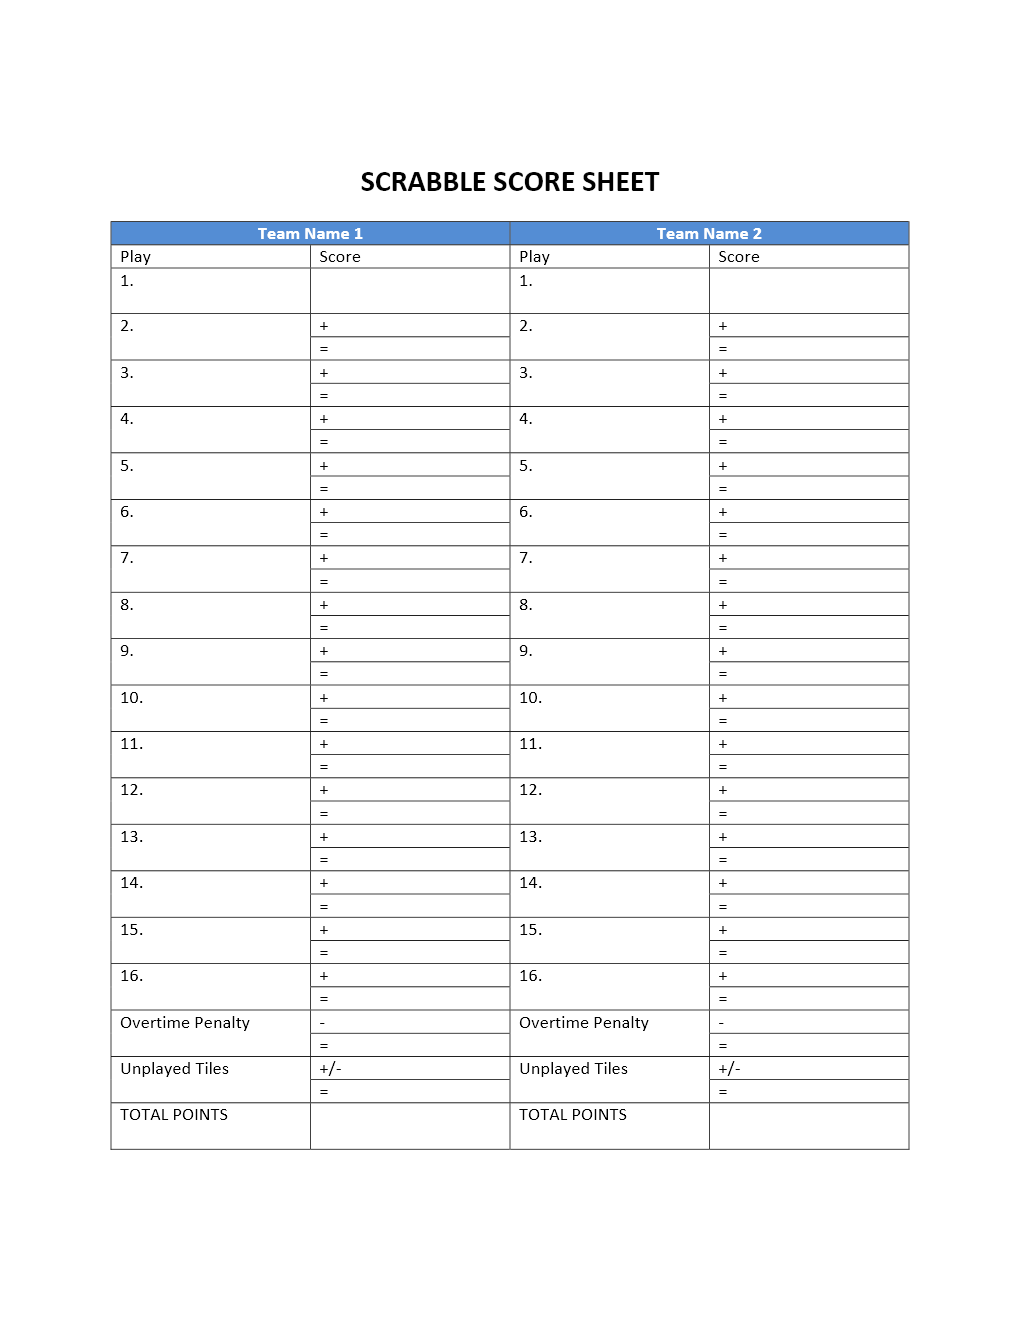 free-scrabble-scoresheet-archives-freewordtemplates